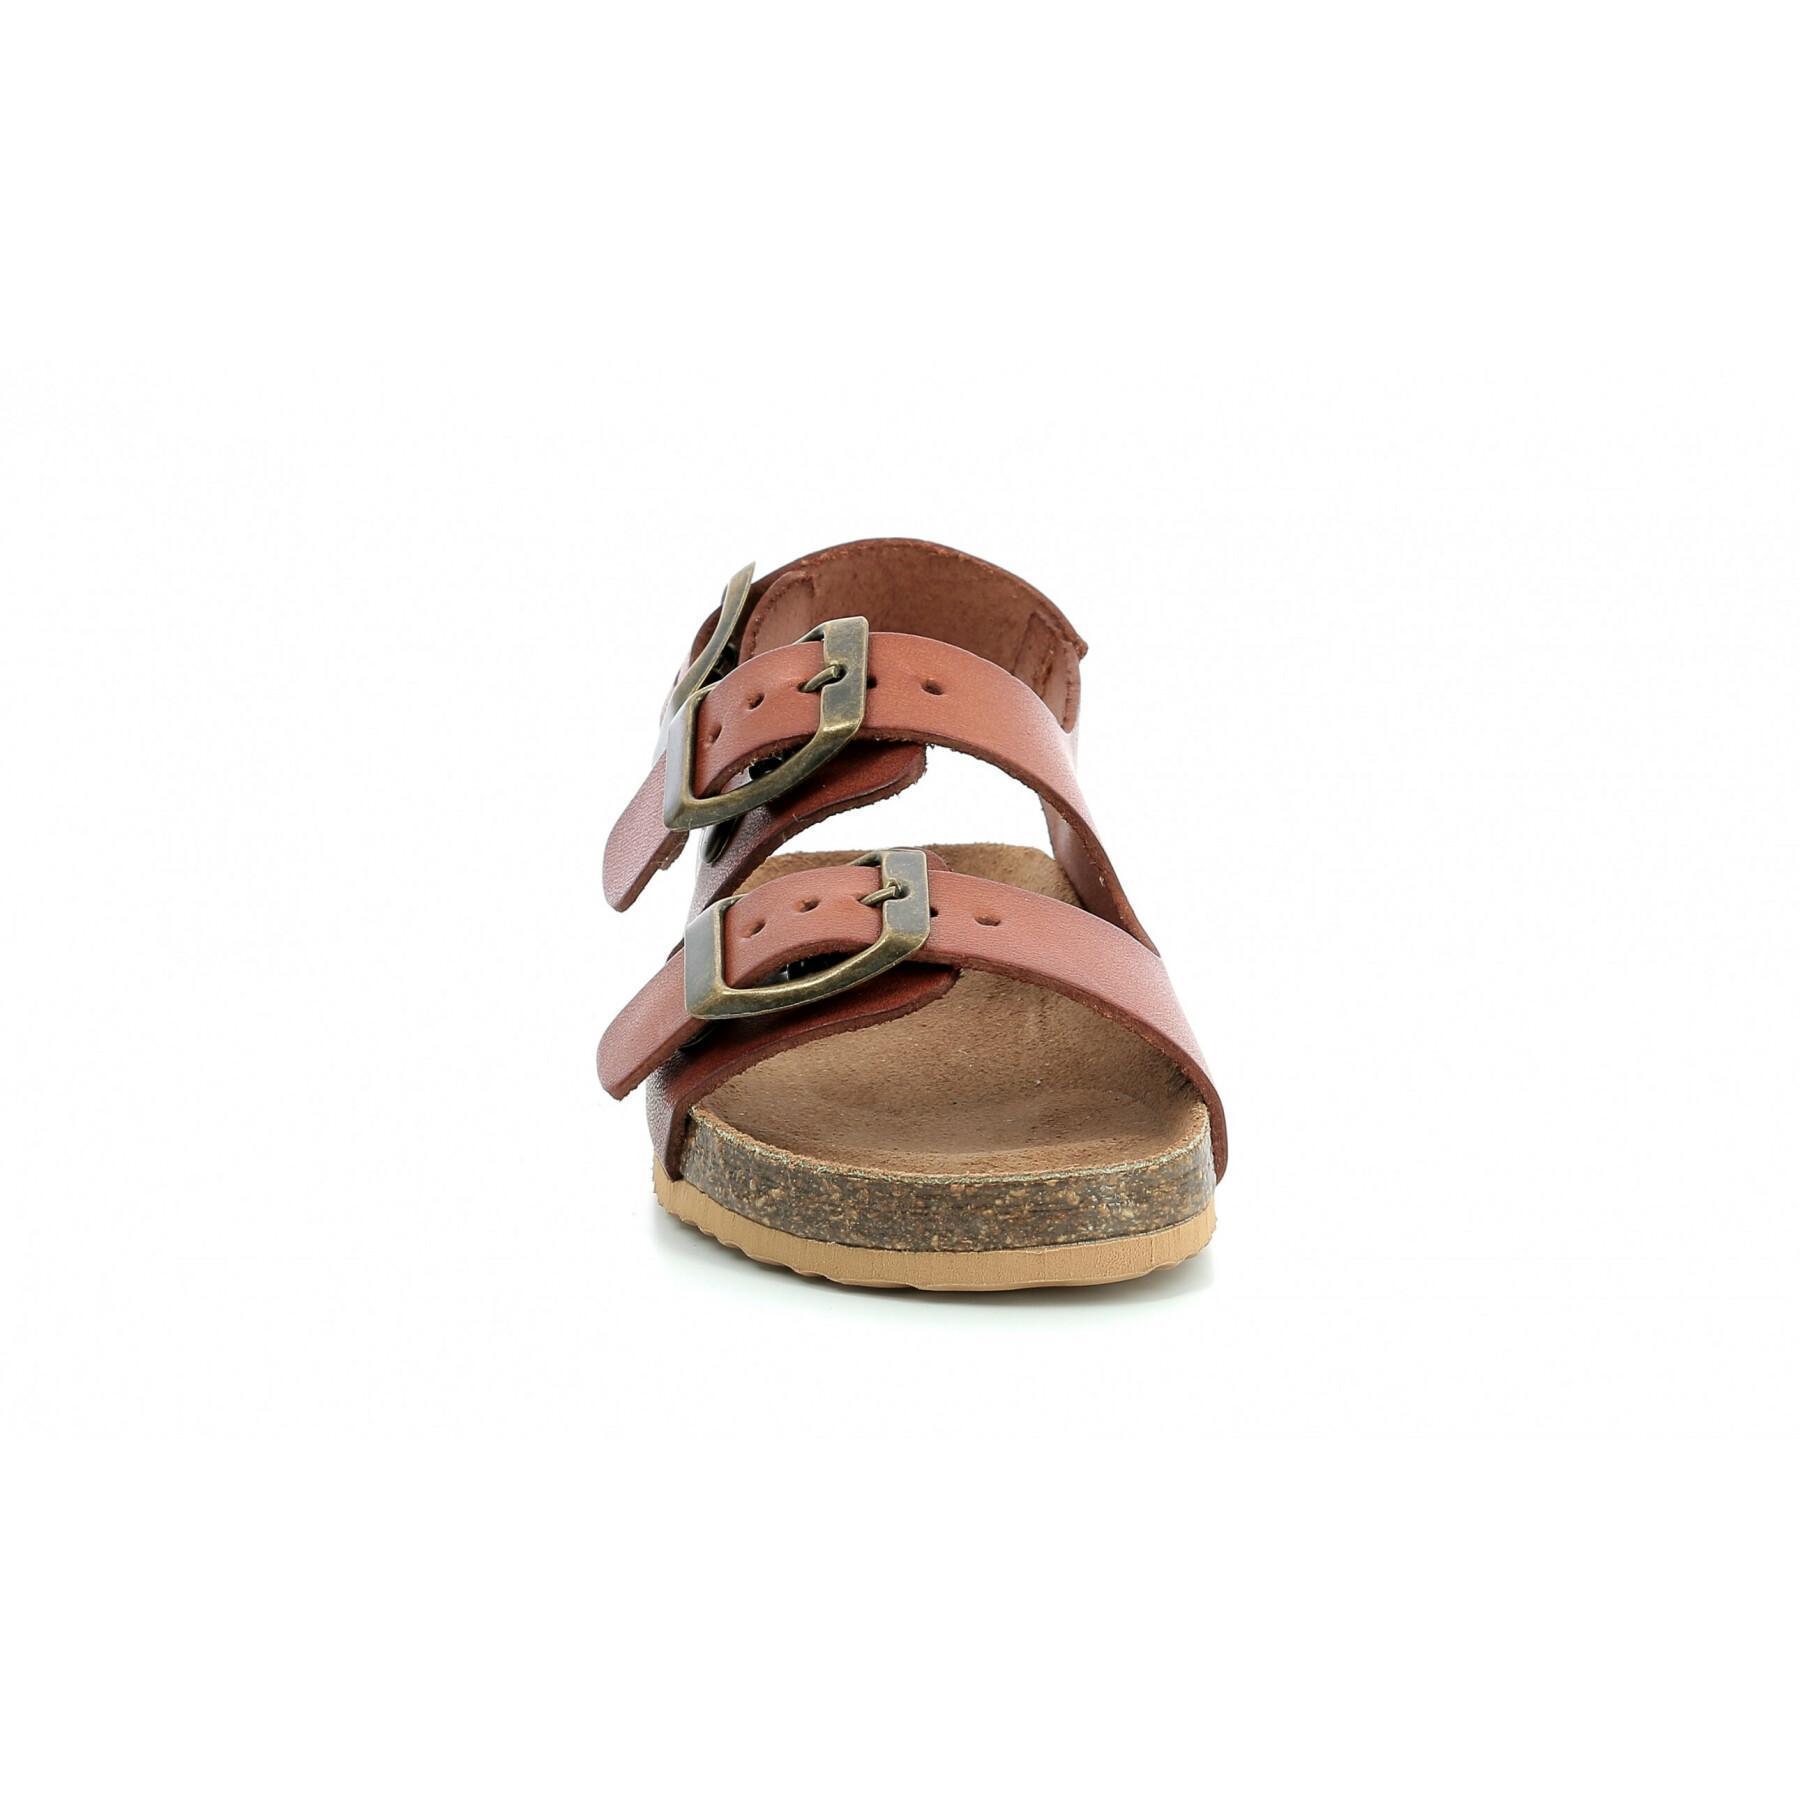 Baby sandals Aster Bayouk